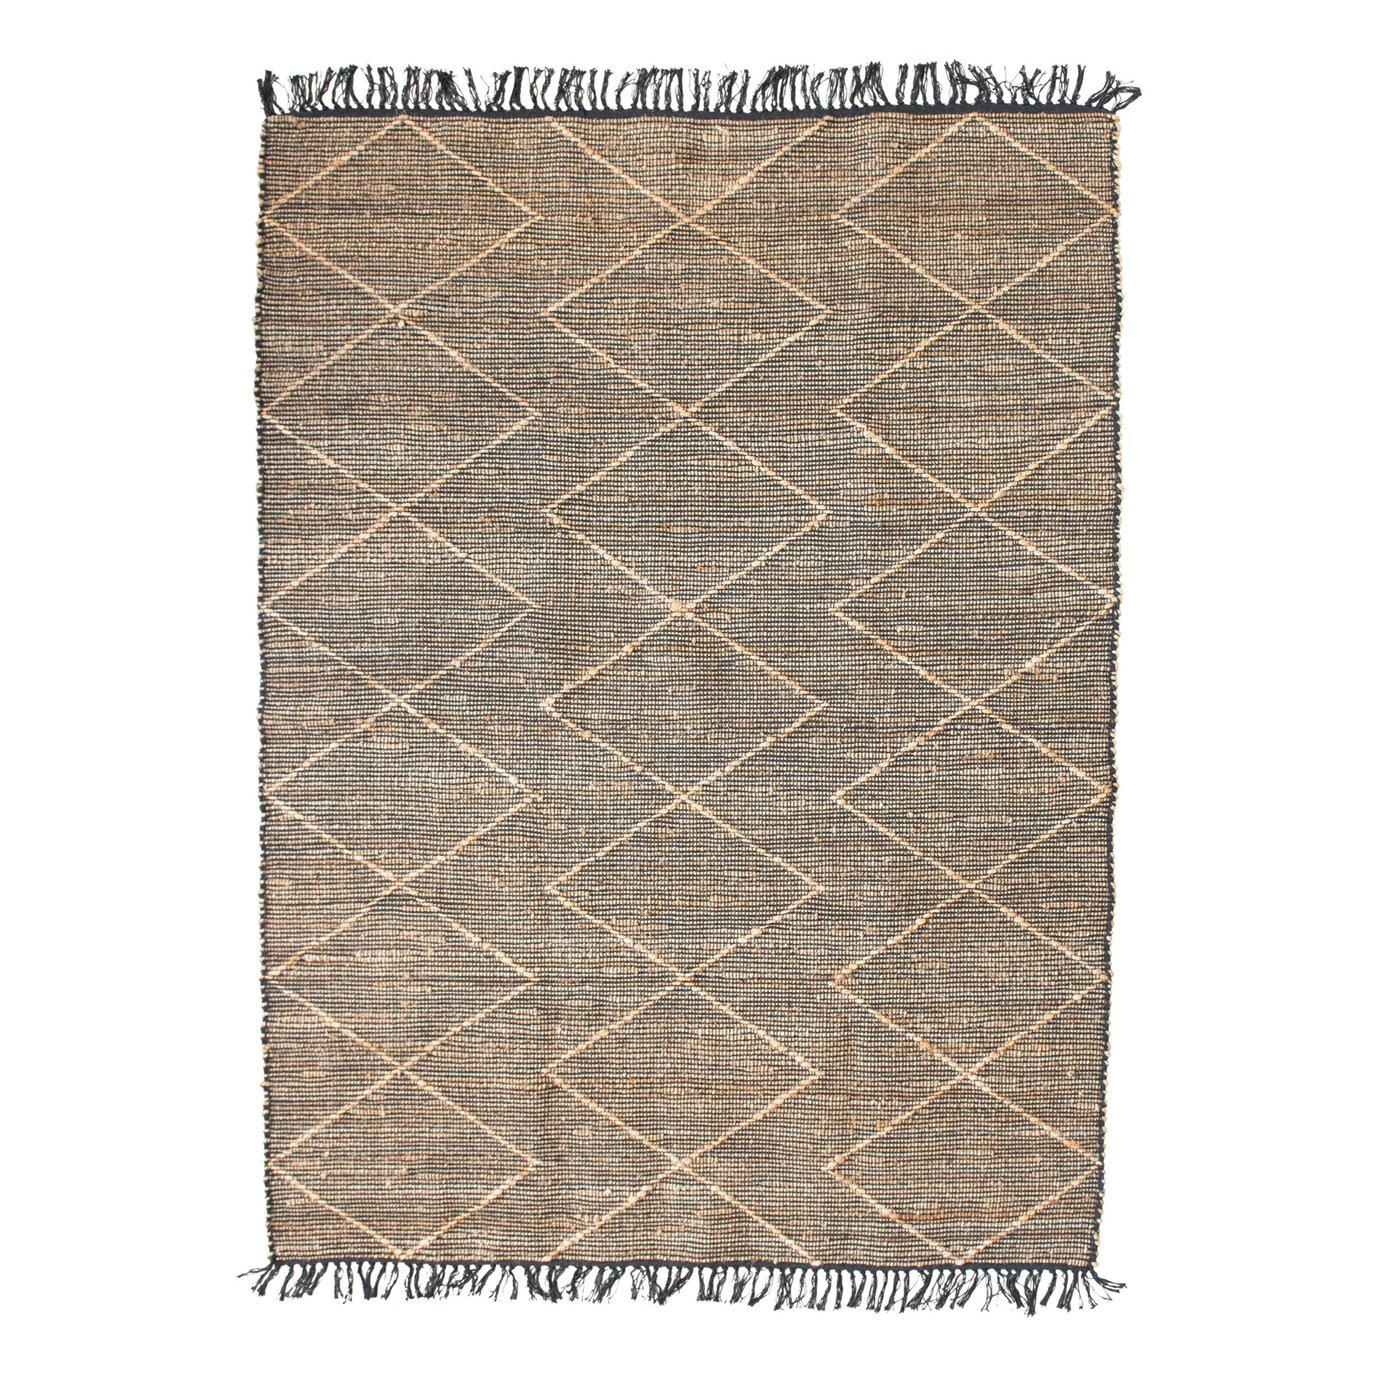 Woven Cotton & Jute Rug with Diamond Pattern & Fringe, Black & Natural